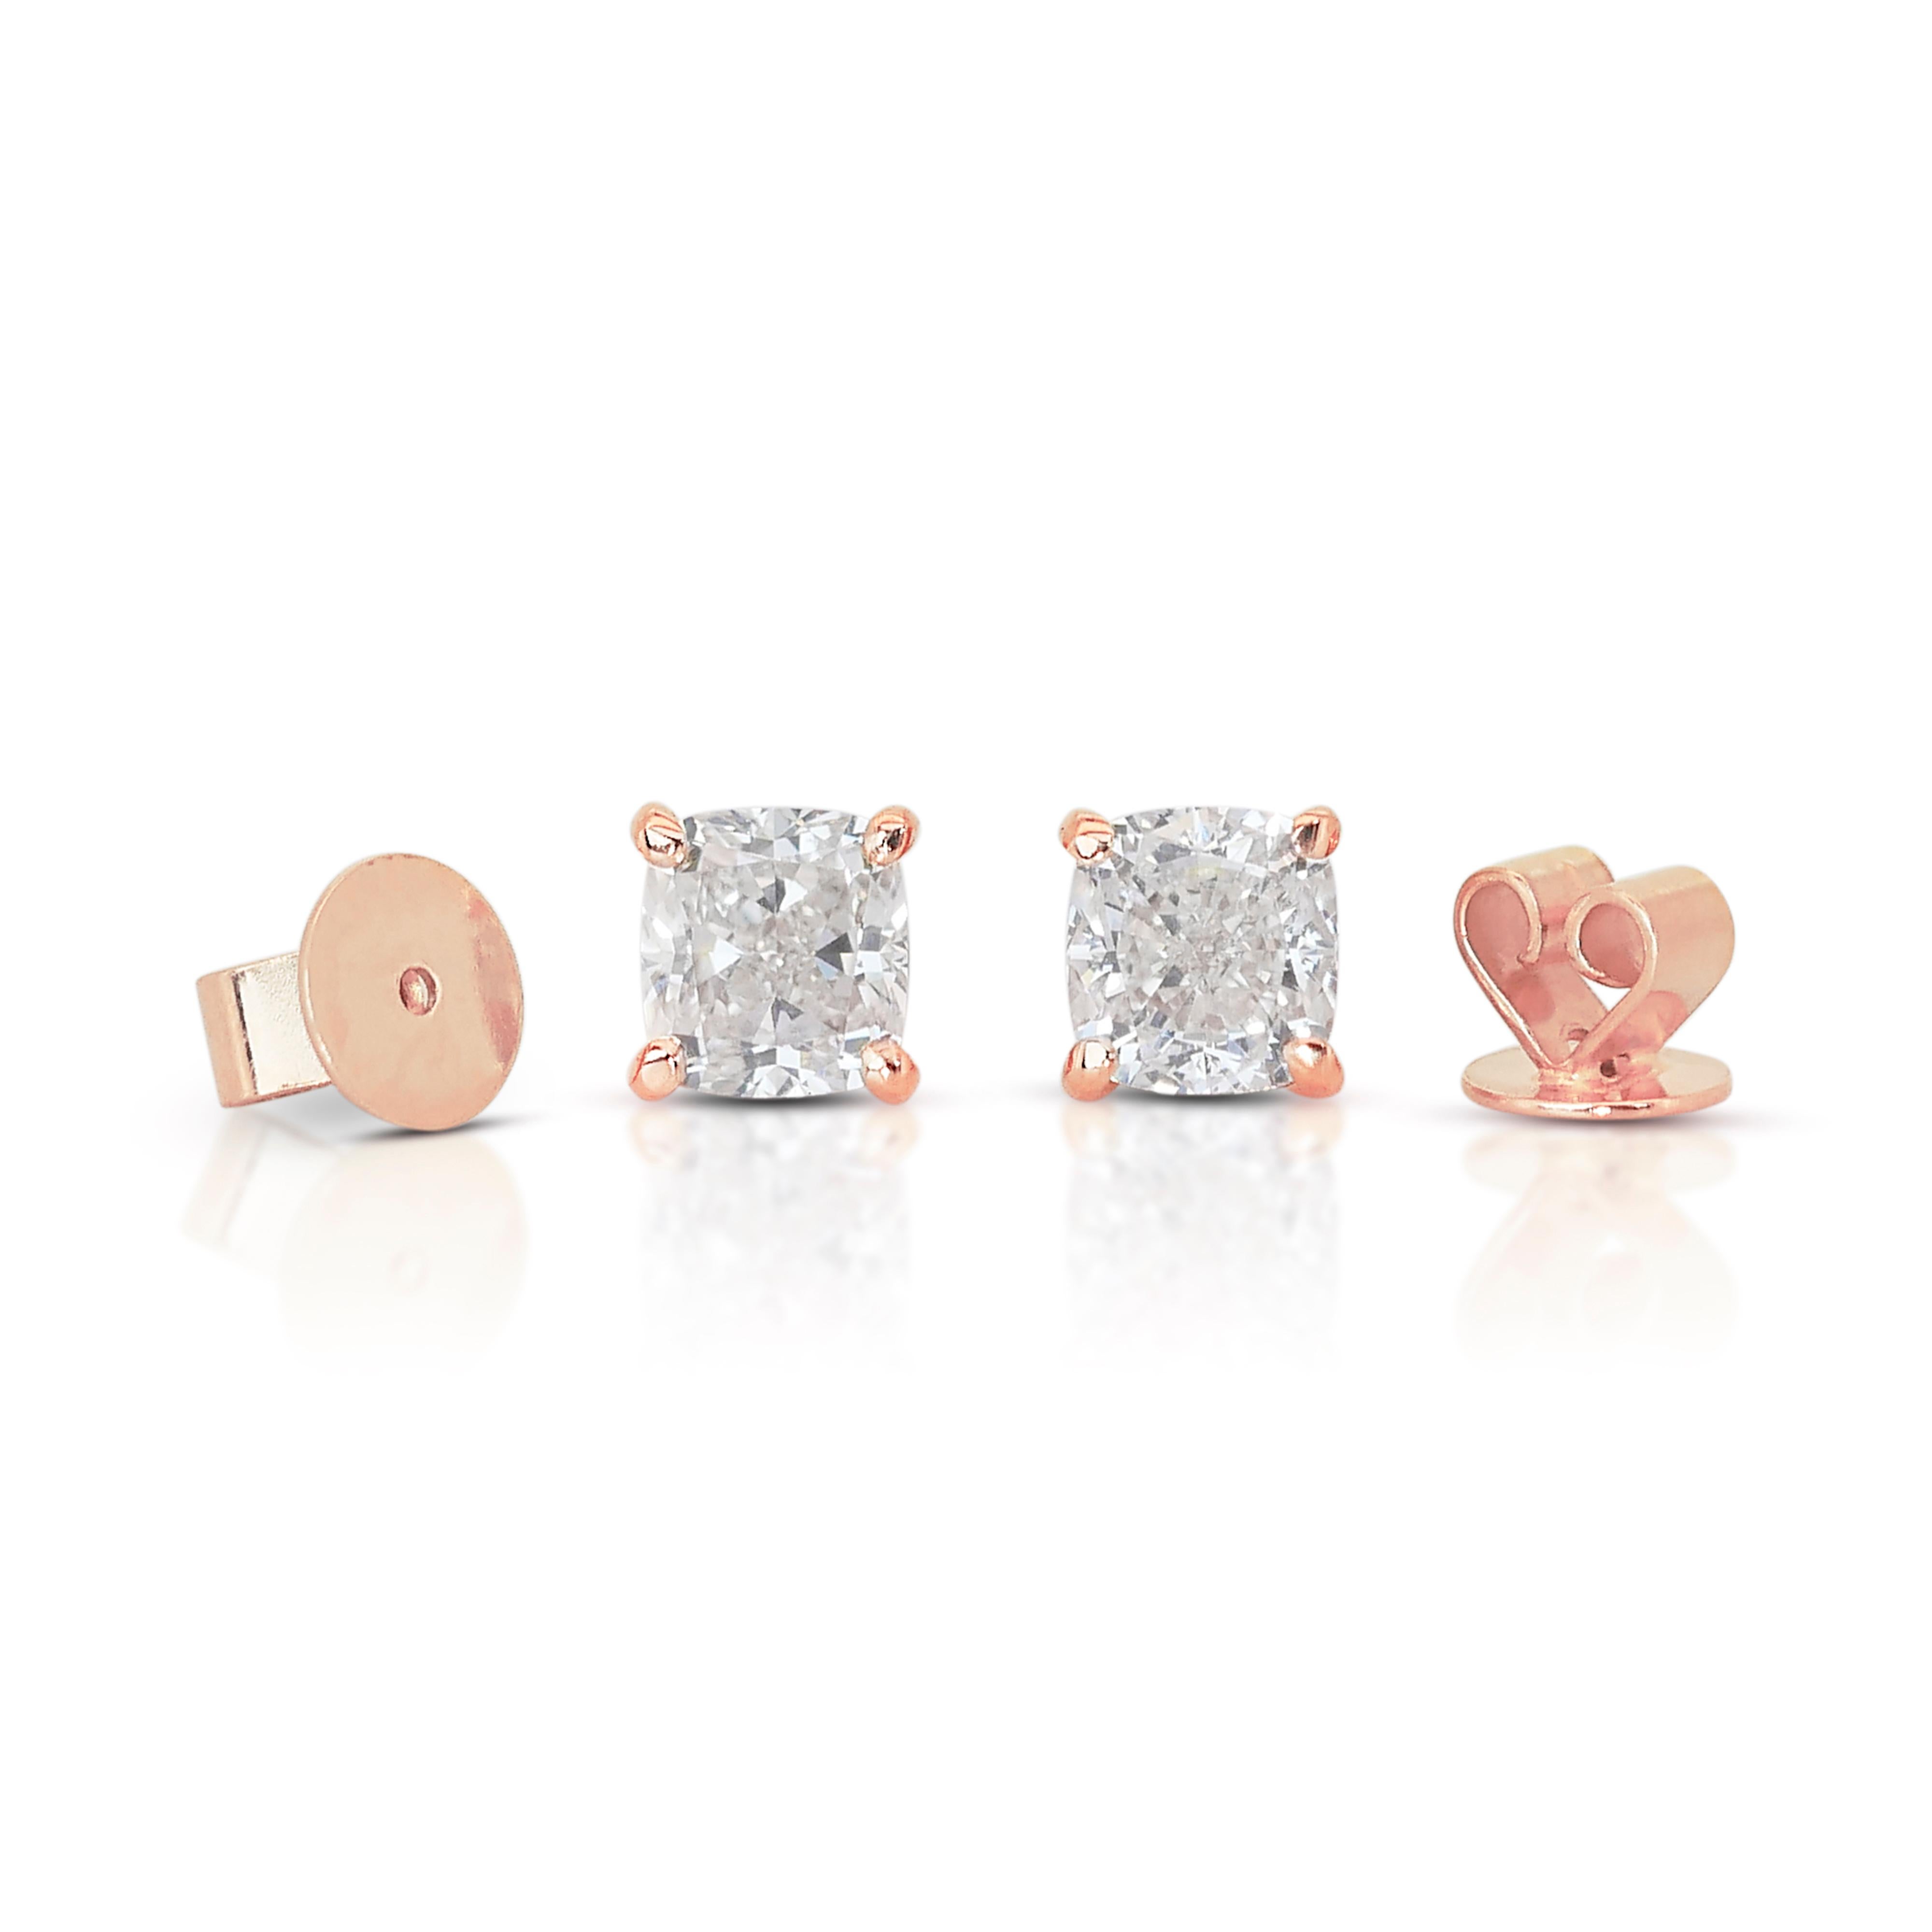 Luxurious 1.68ct Diamond Stud Earrings in 14k Rose Gold - IGI Certified For Sale 2